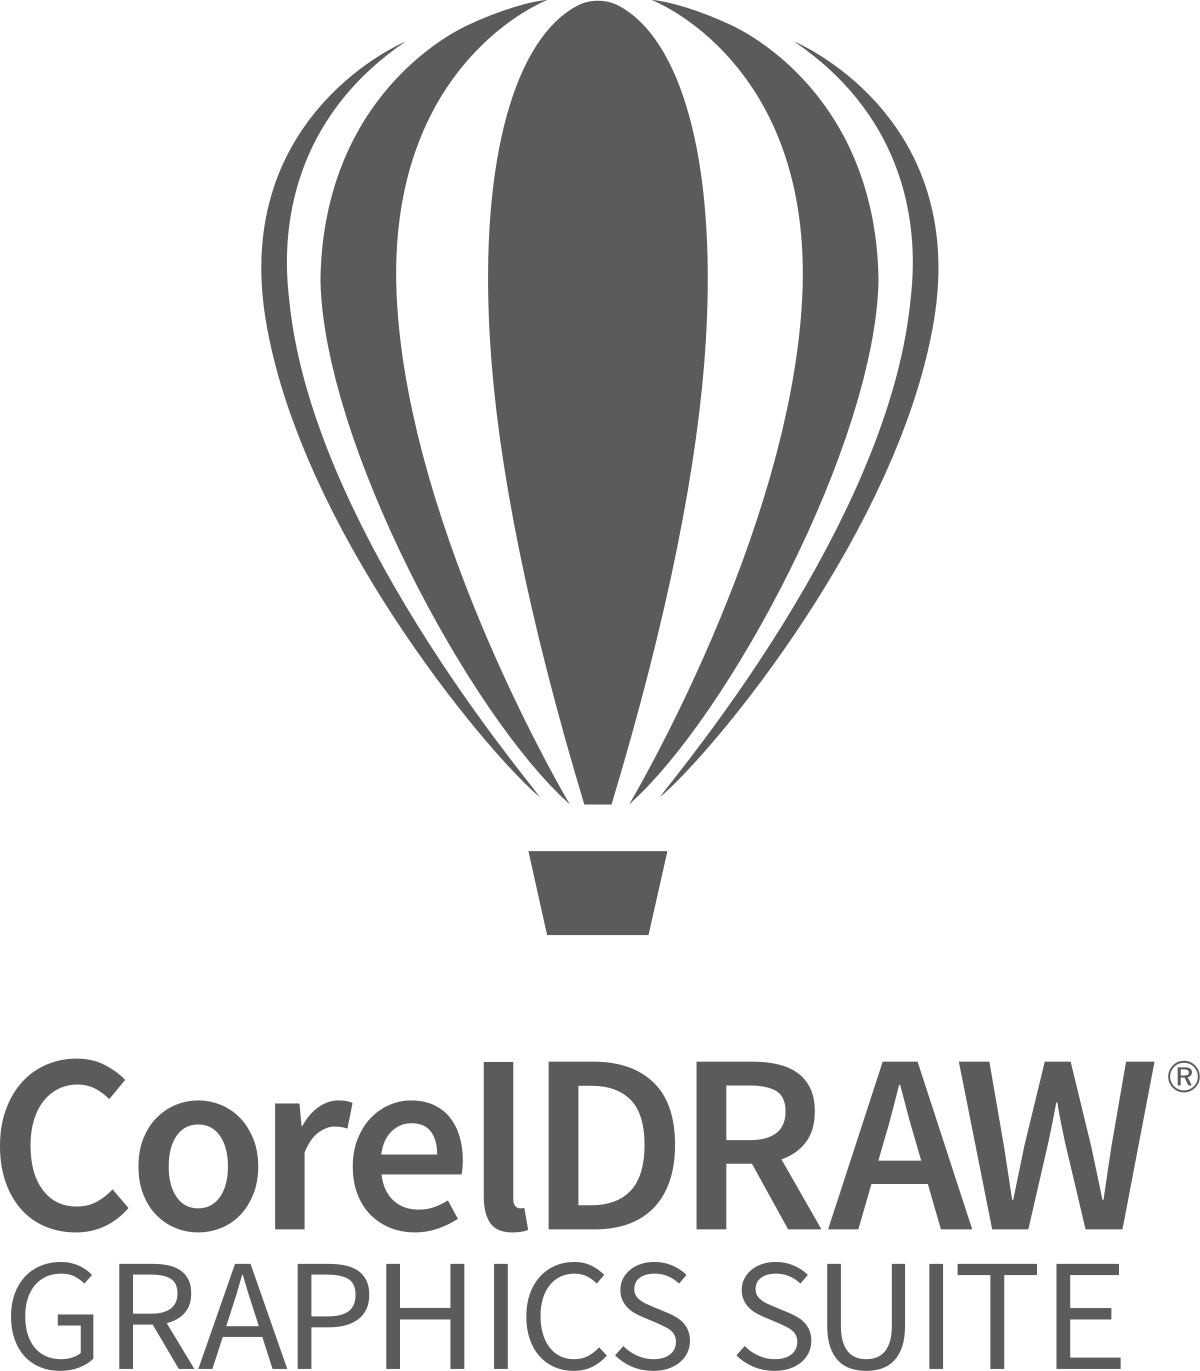 What Is Coreldraw Graphics Suite Mefoz